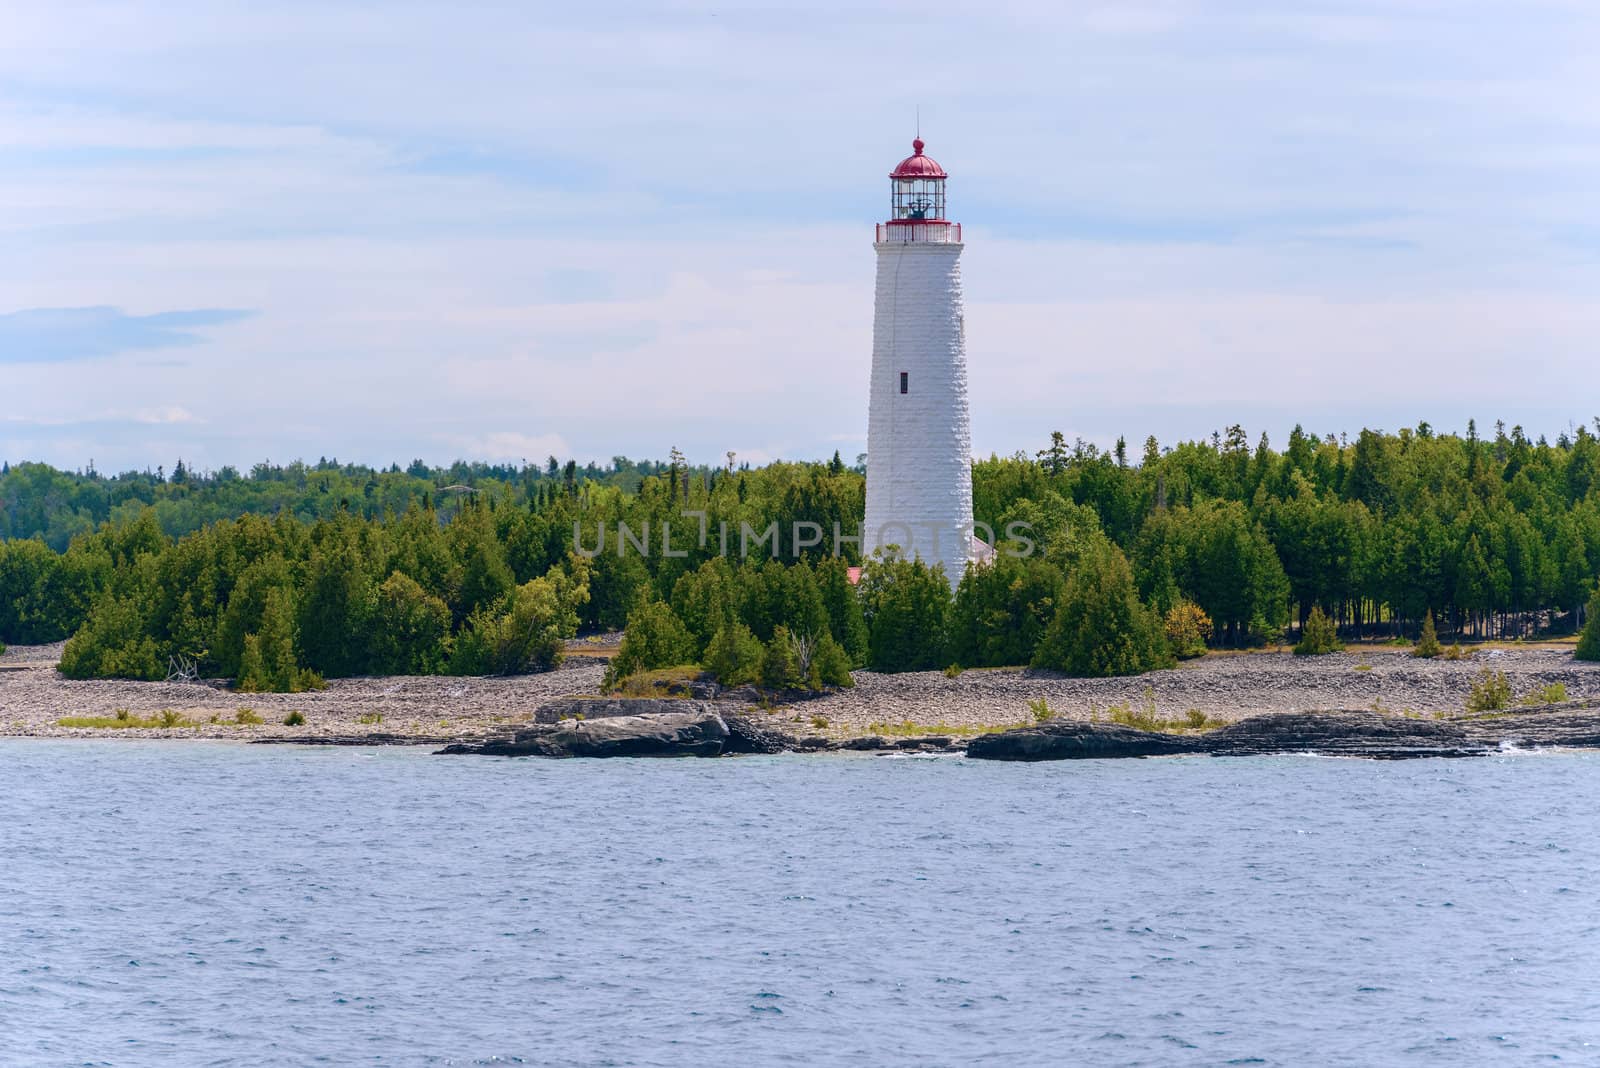 Lighthouse overlooks the Georgian bay, Ontario Canada